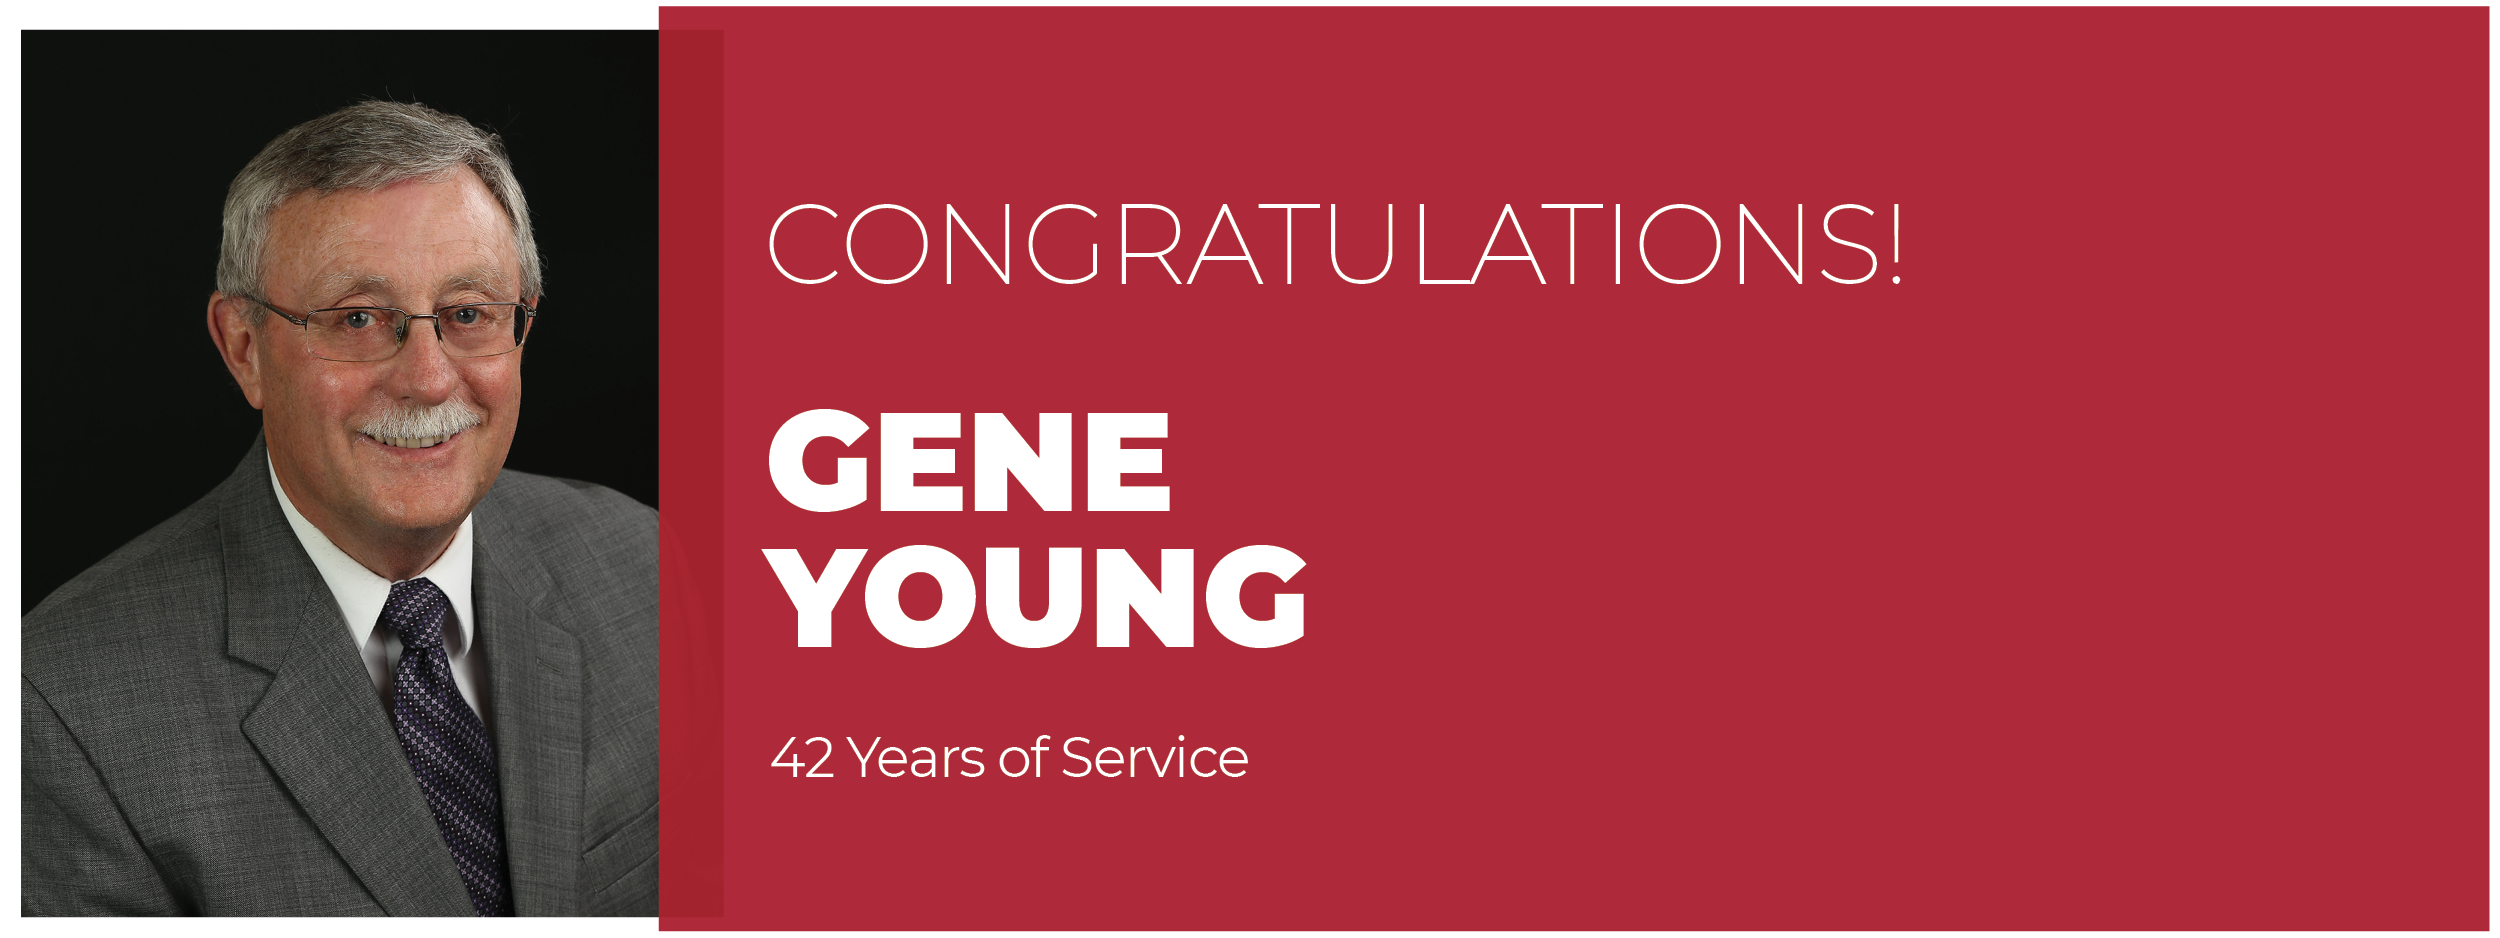 Gene Young Retirement